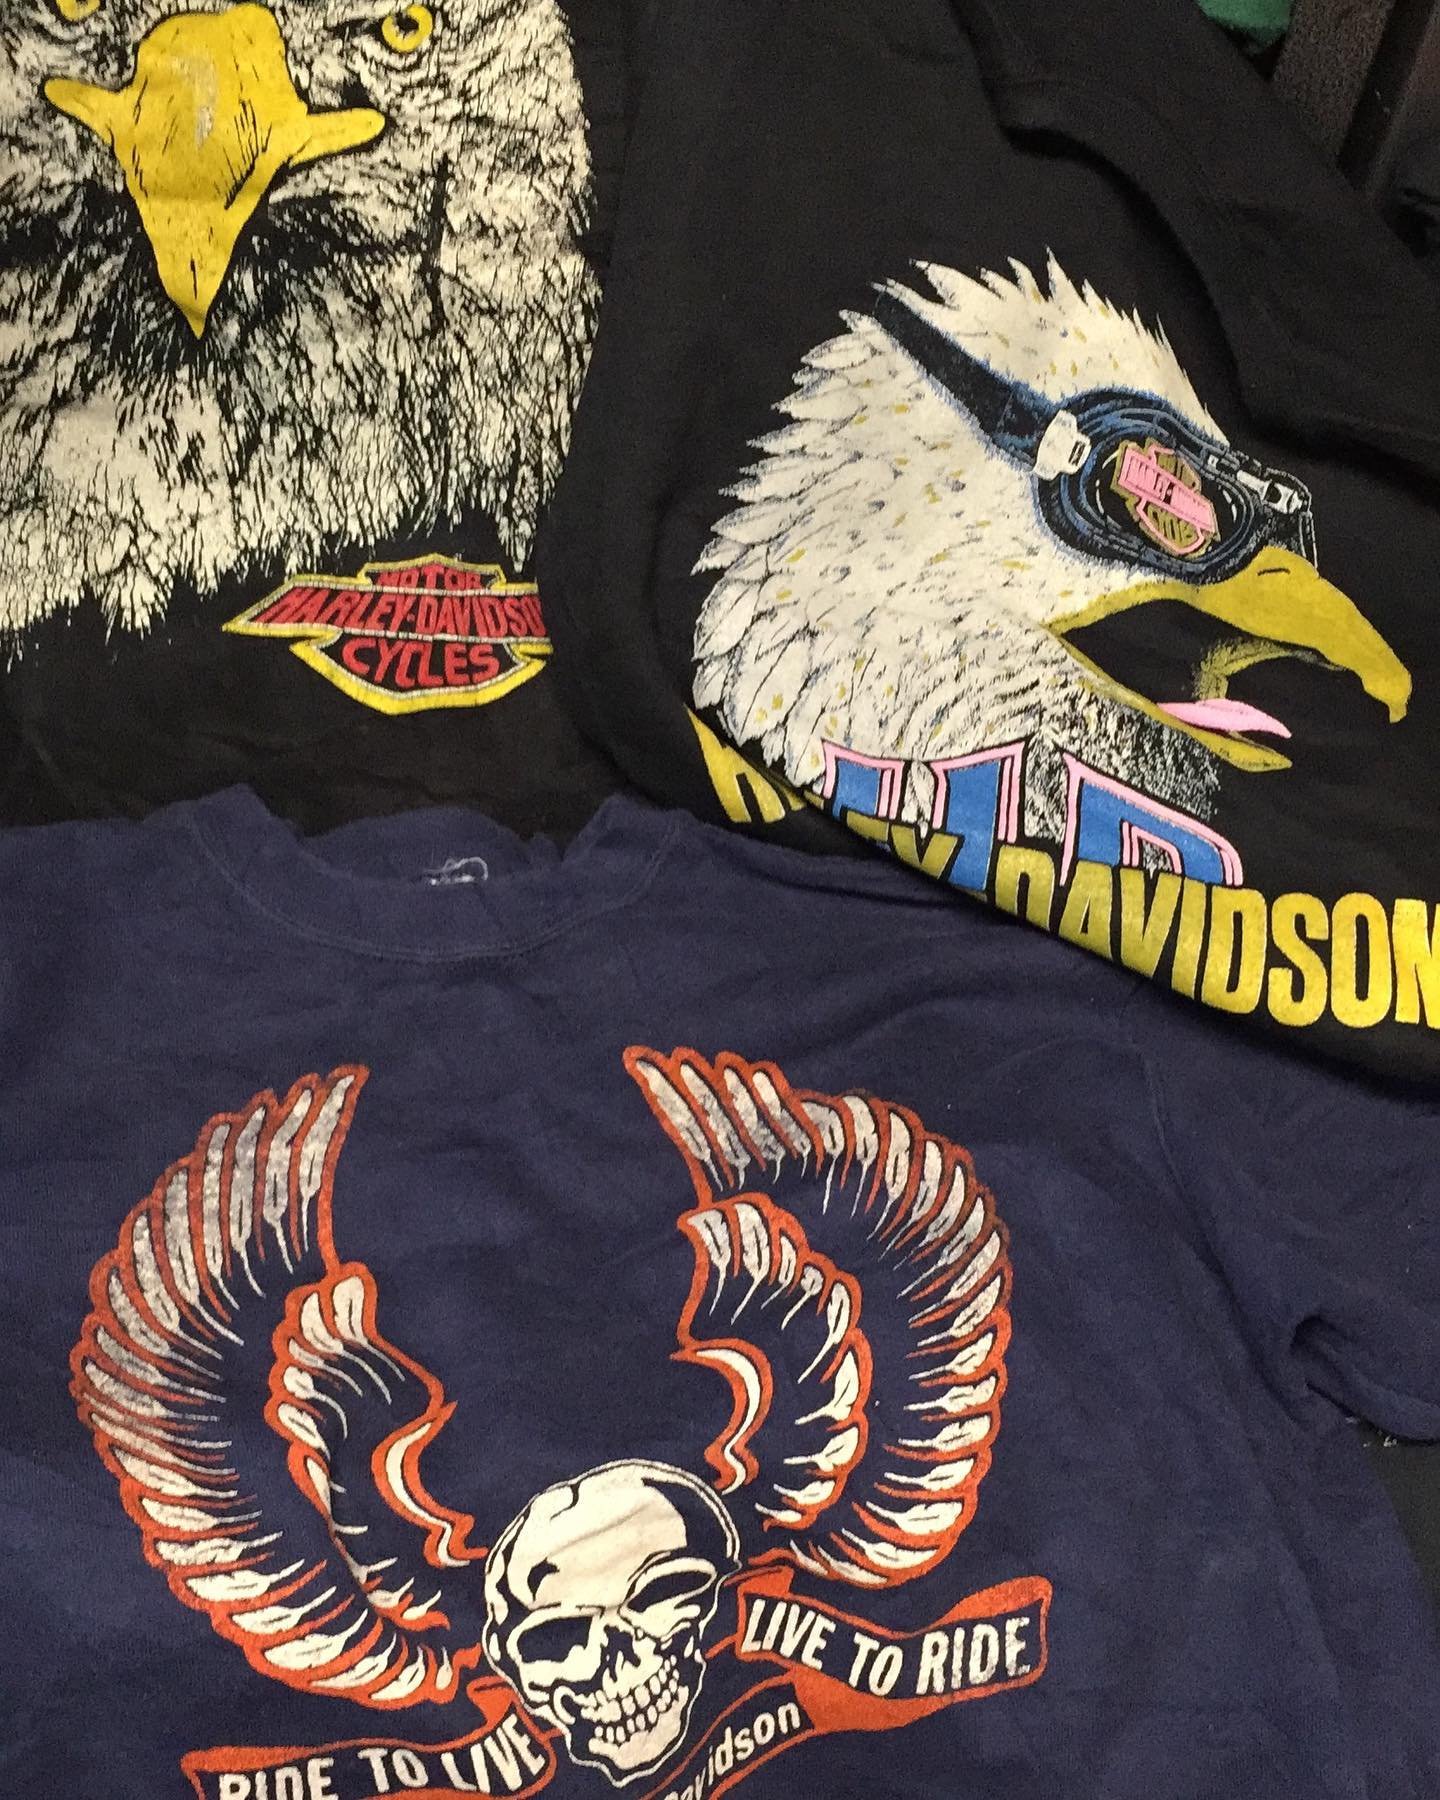 #vintageharleydavidson sweatshirts dropping tomorrow at the Mall.